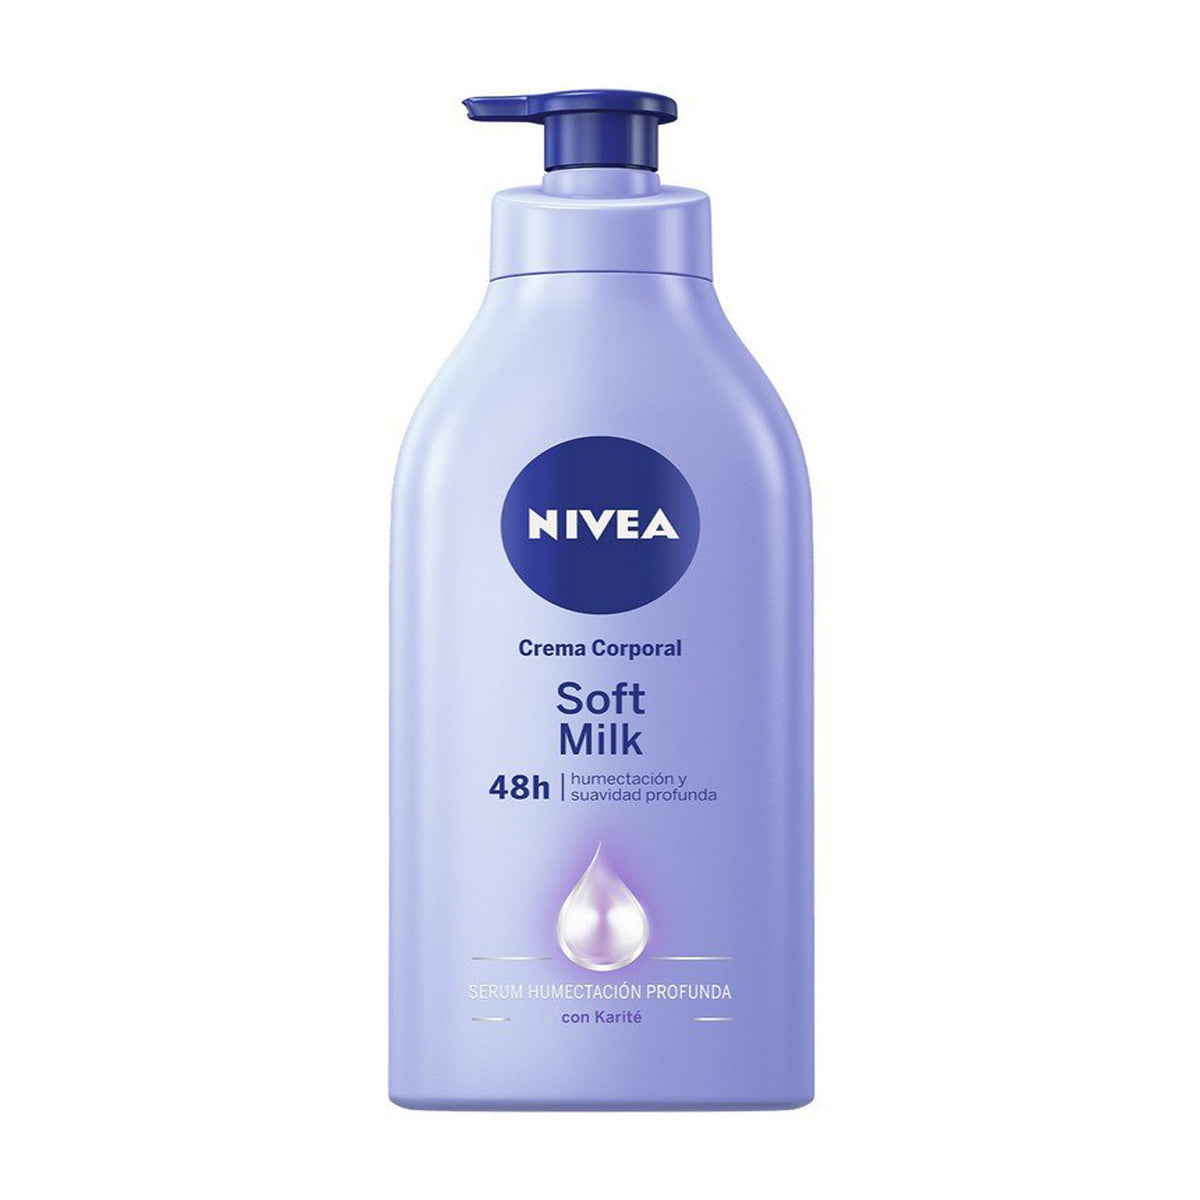 Nivea Crema Corporal Soft Milk 48hrs